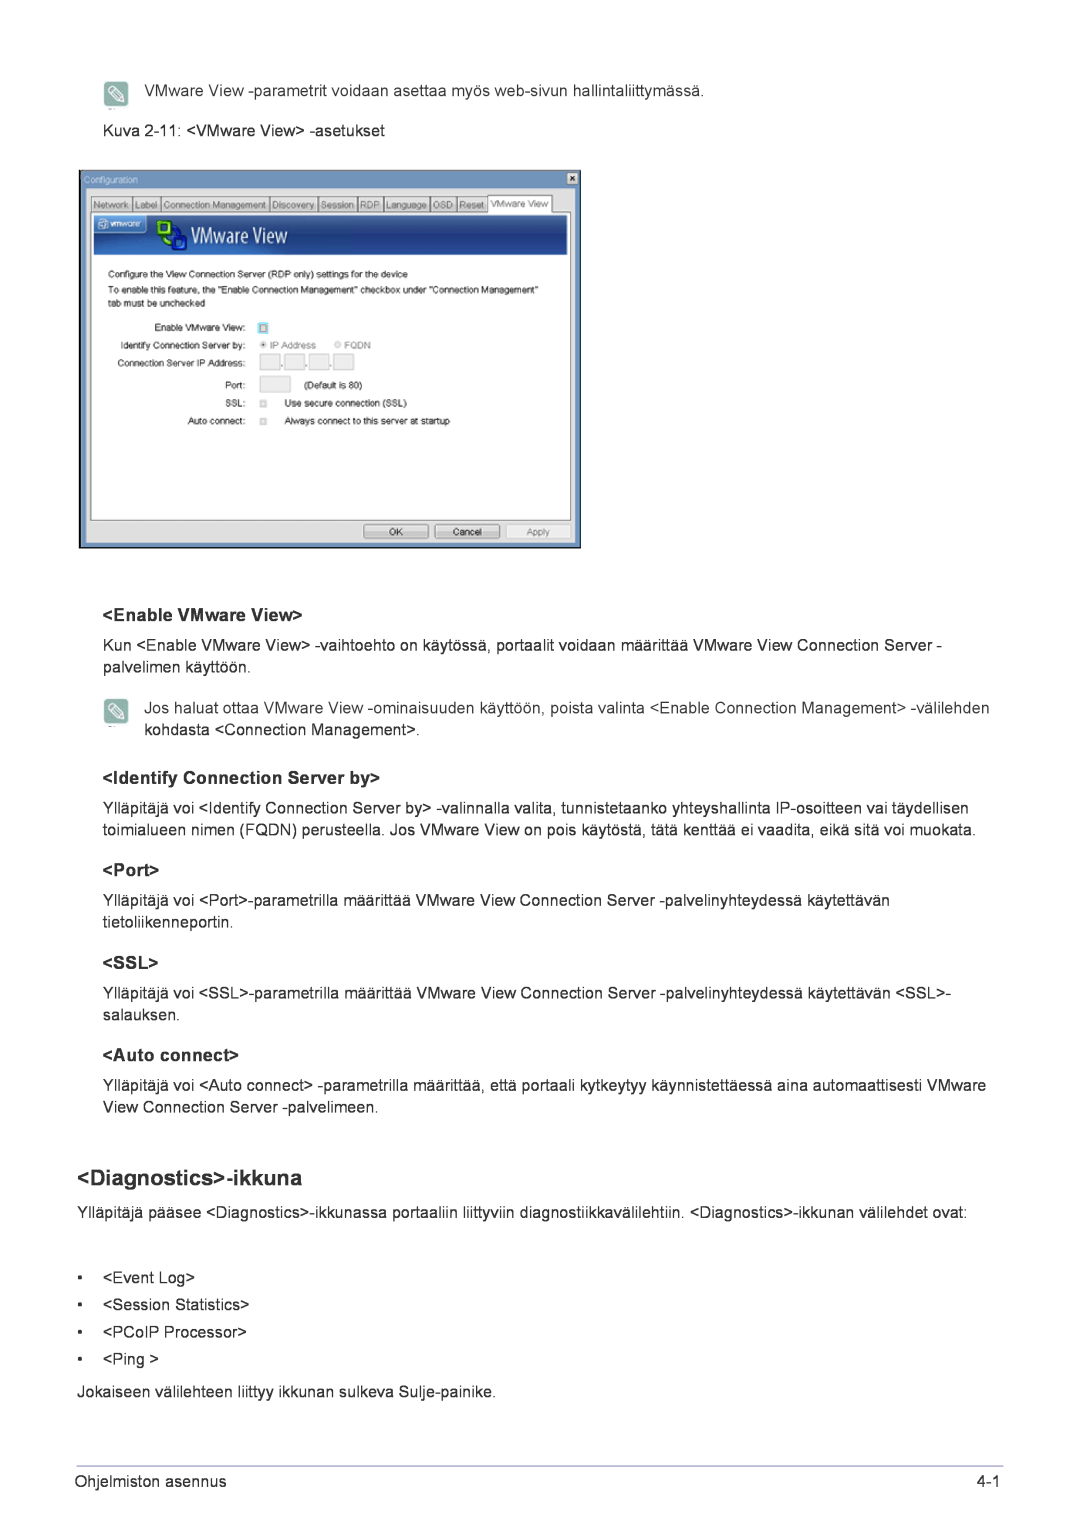 Samsung LF22NPBHBNP/EN manual Diagnostics-ikkuna, Enable VMware View, Identify Connection Server by, Port, Auto connect 